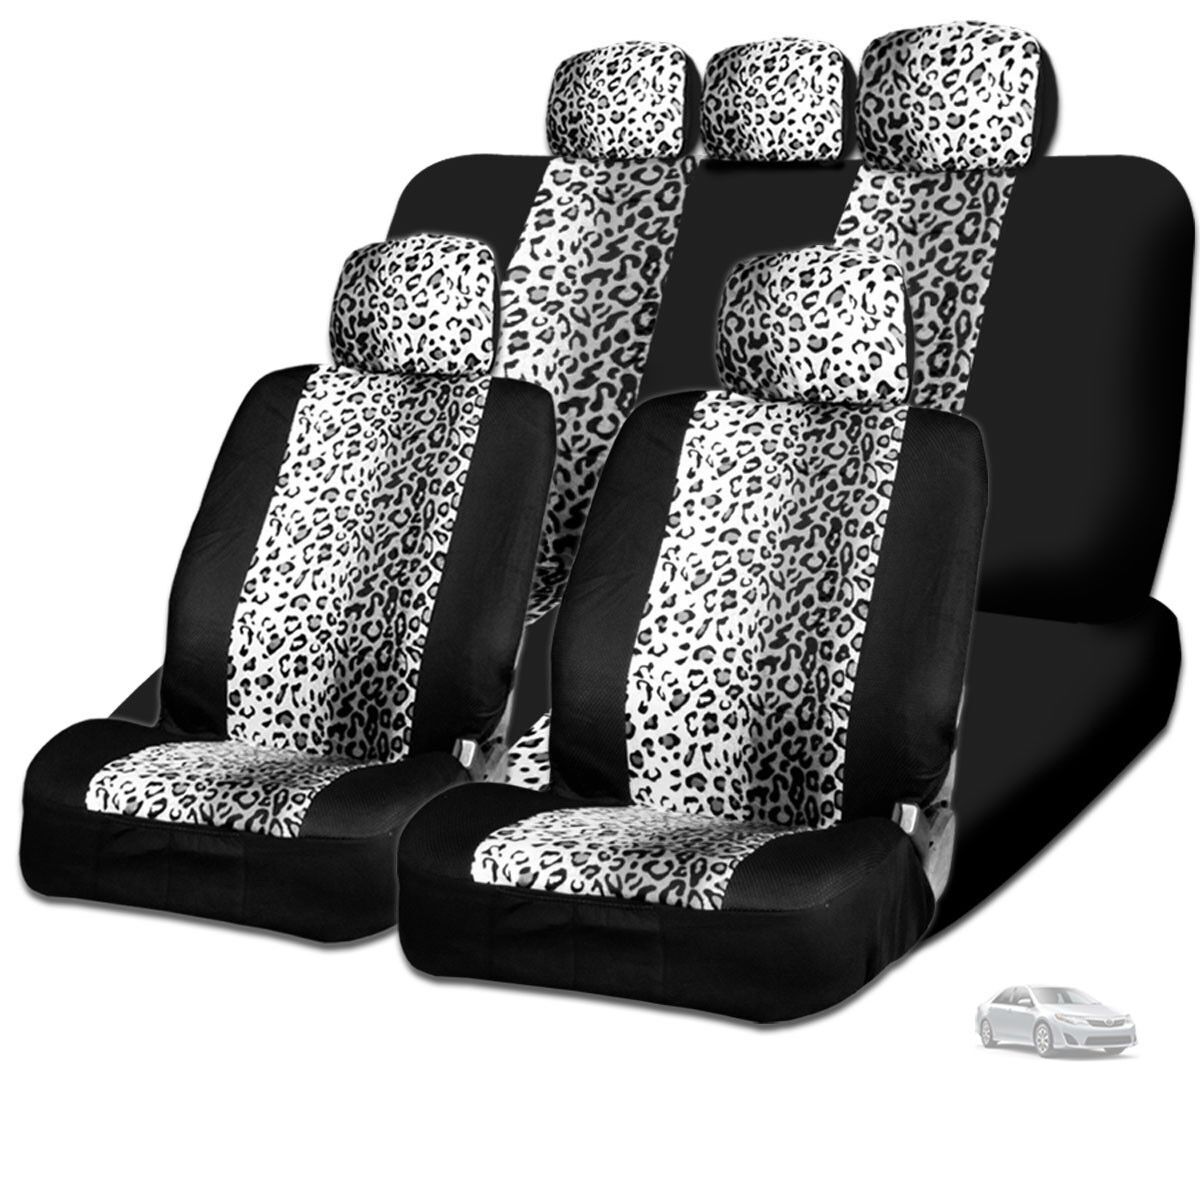 New Design Safari Snow Leopard Print Car Truck SUV Seat Covers For Toyota